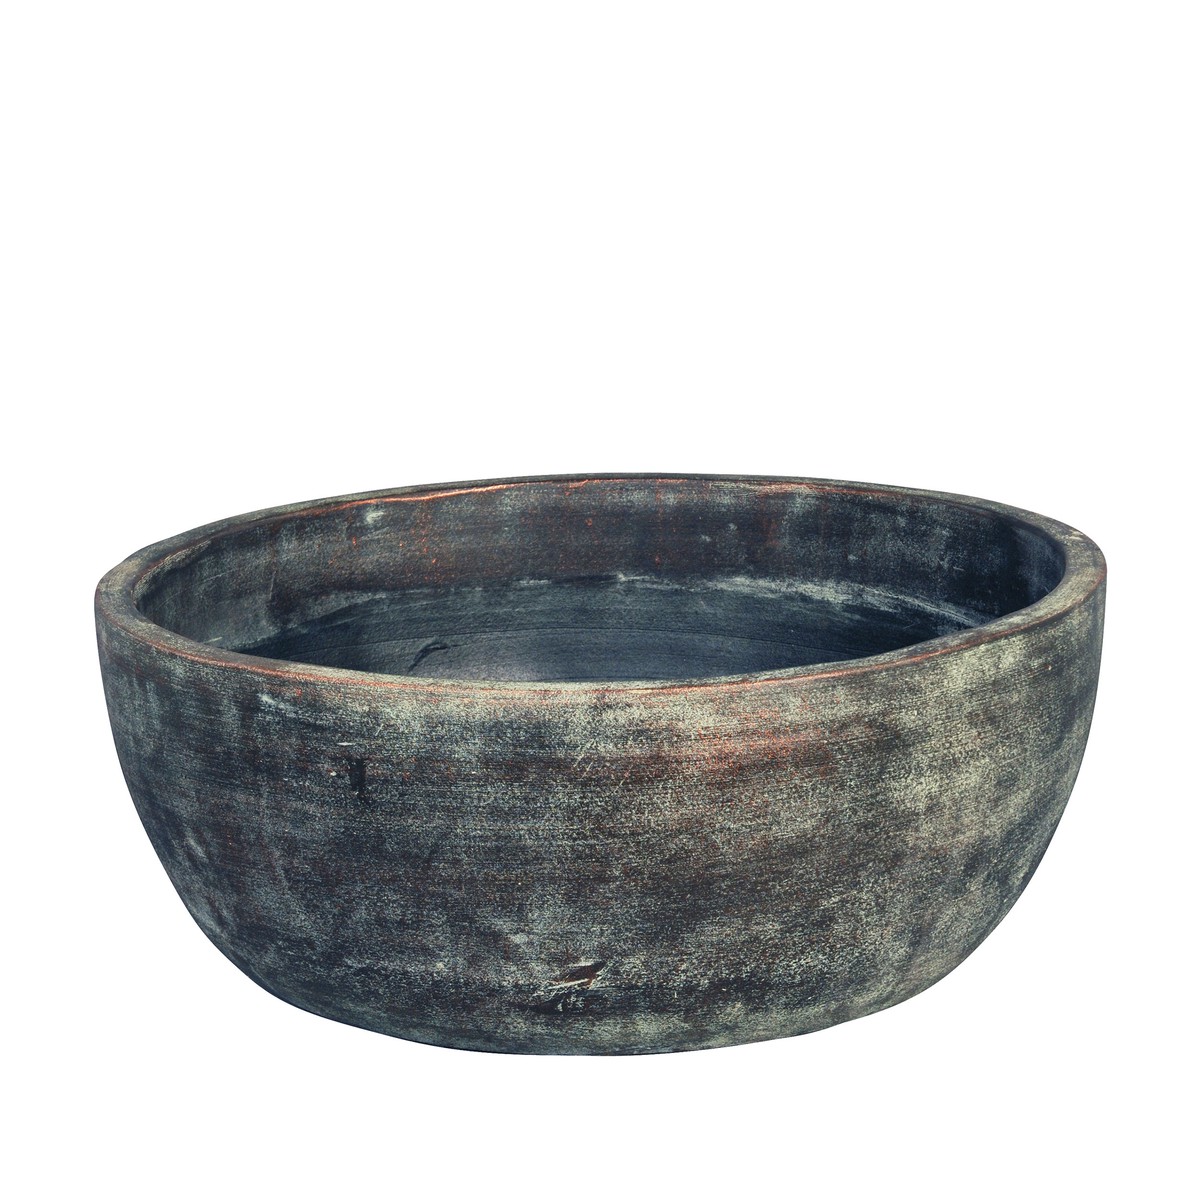   Bowl Ceramica Vietnam 32x14cm Verde  32x14cm